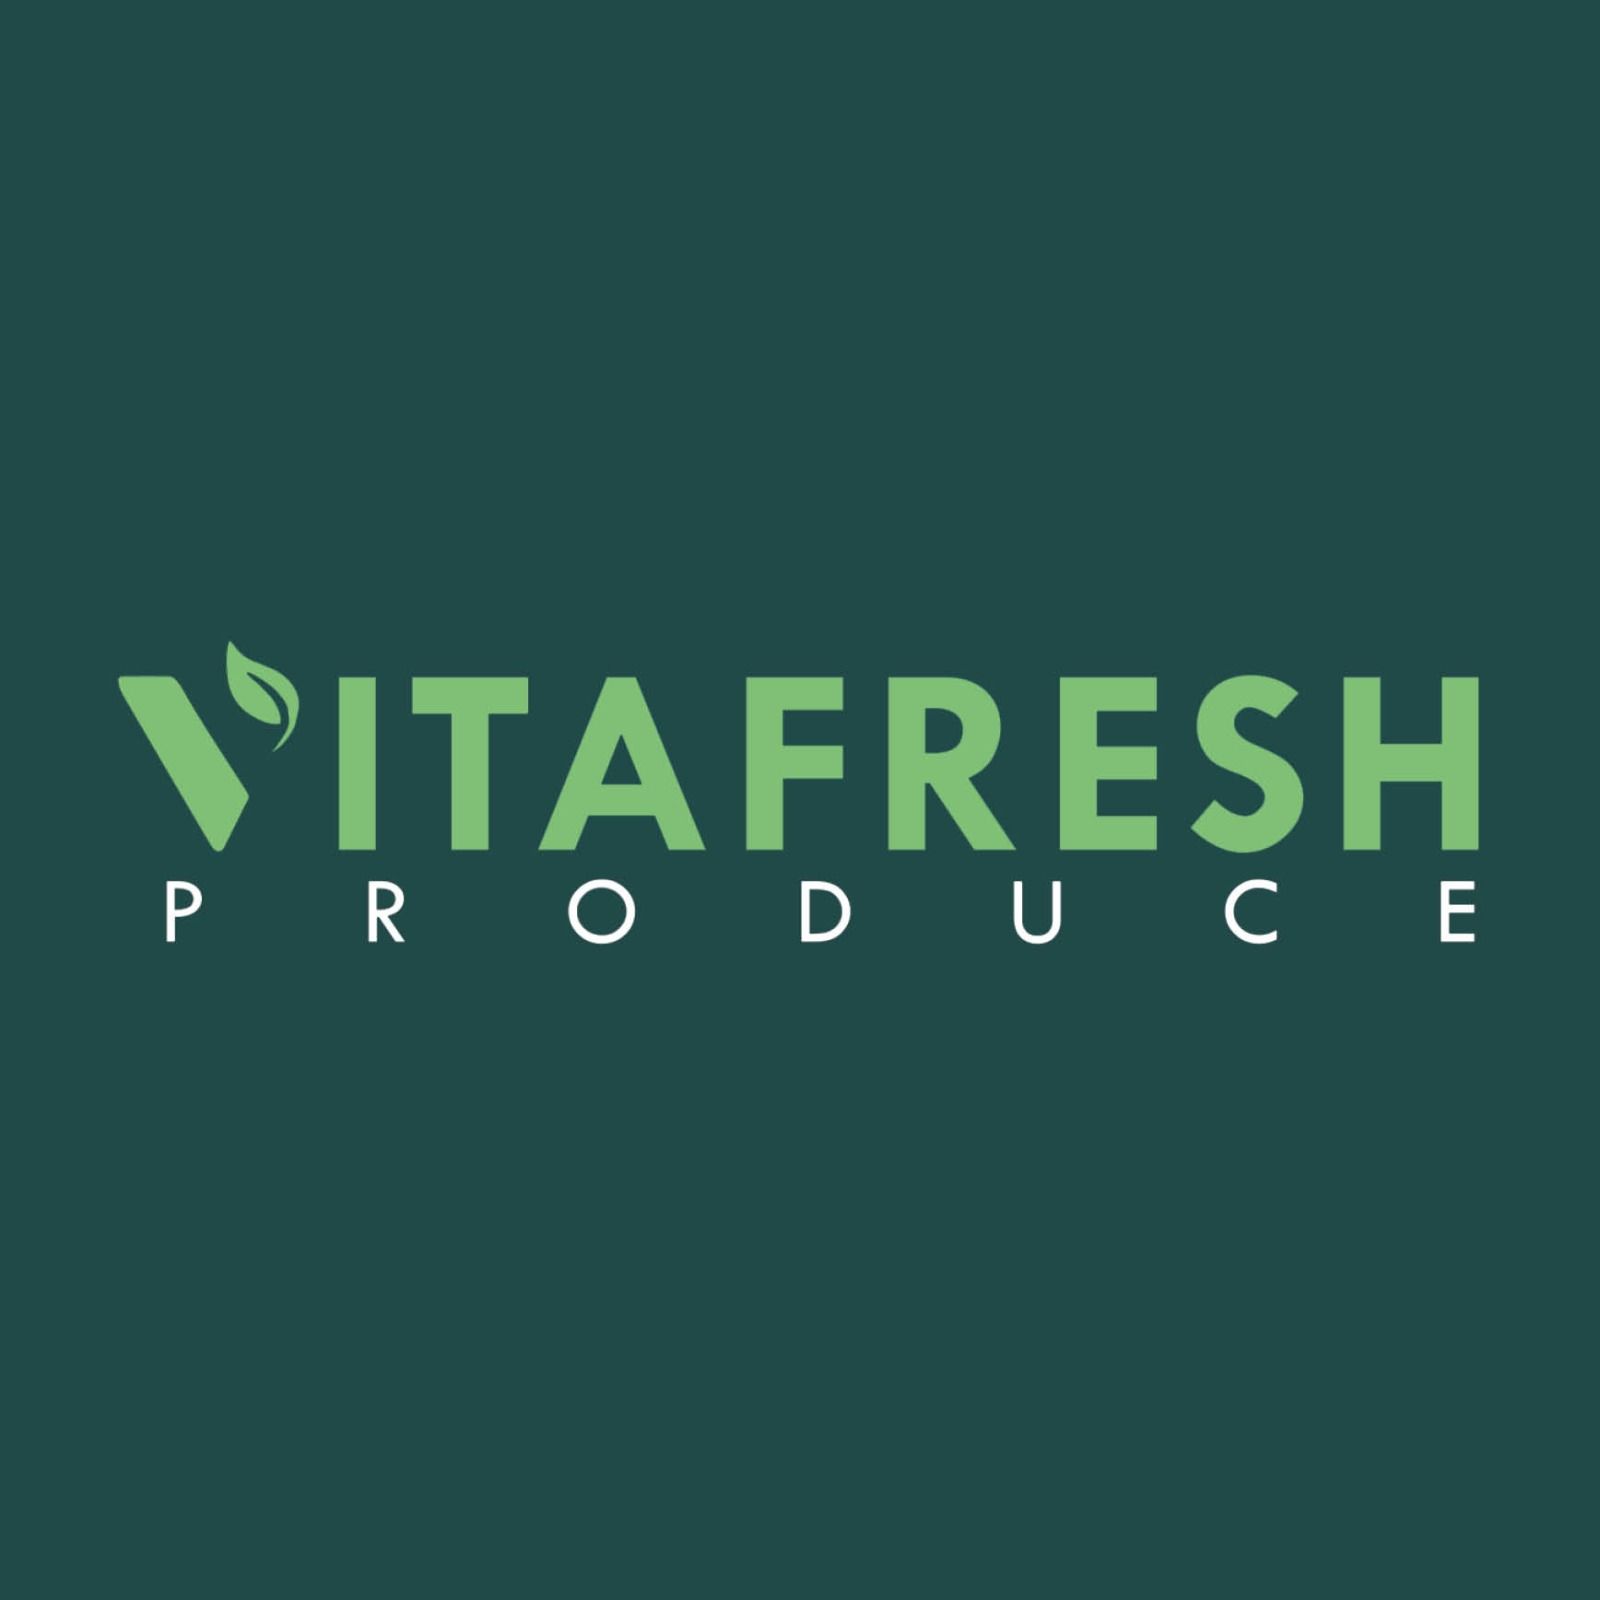 Vitafresh Produce